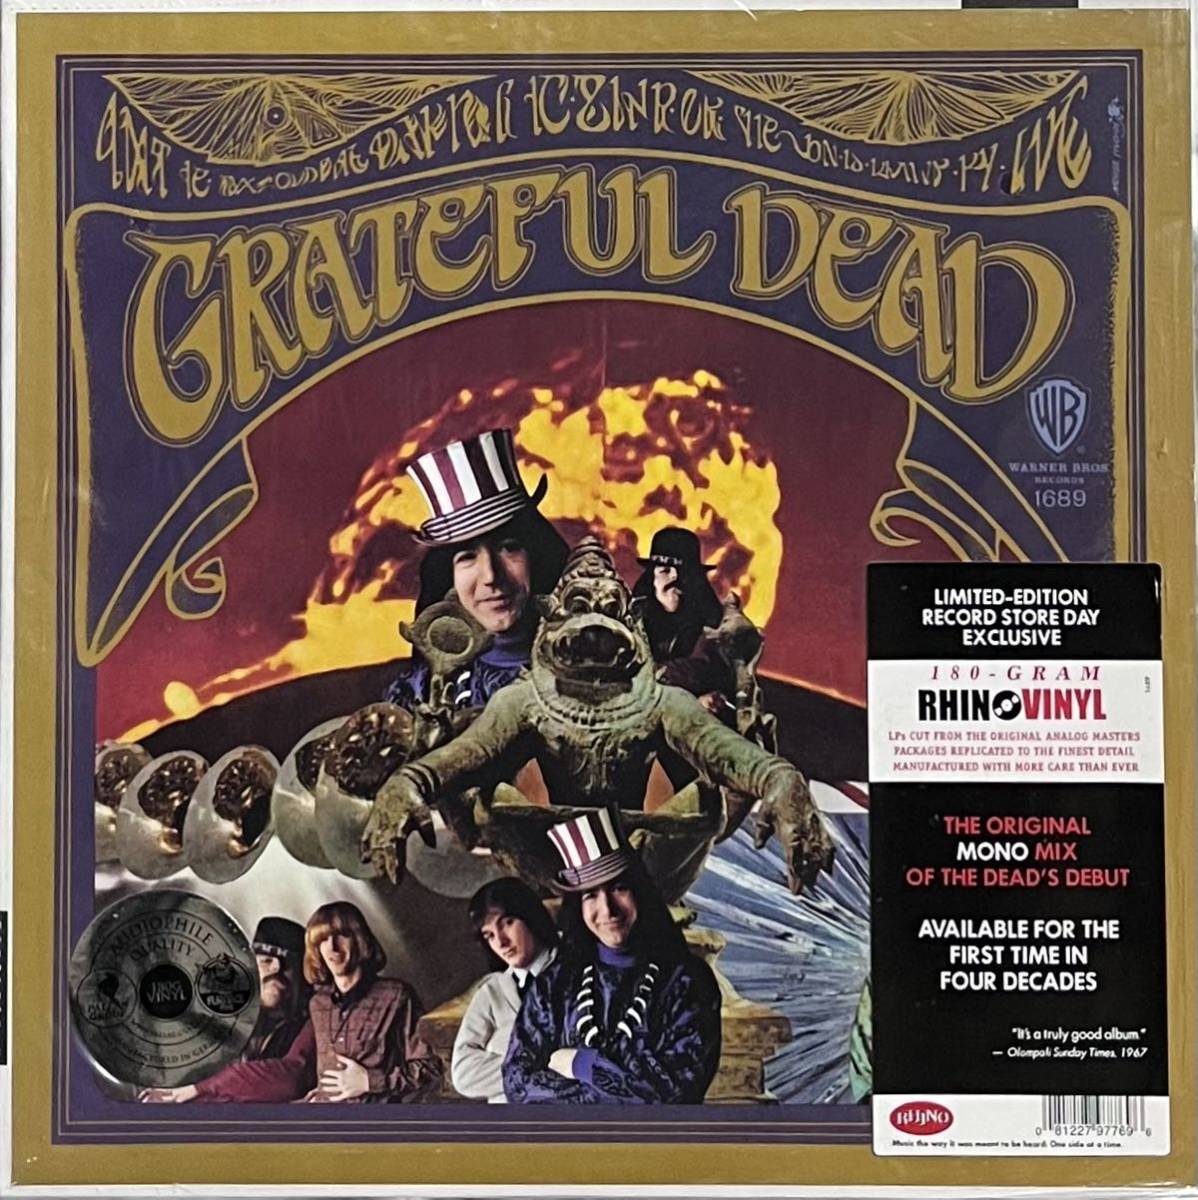 【 The Grateful Dead 】Psychedelic 1st LP 12” Mono Record Store Day  пластинка  180g Vinyl Rhino  серый  ...  полный  *   DEAD   DEAD ...